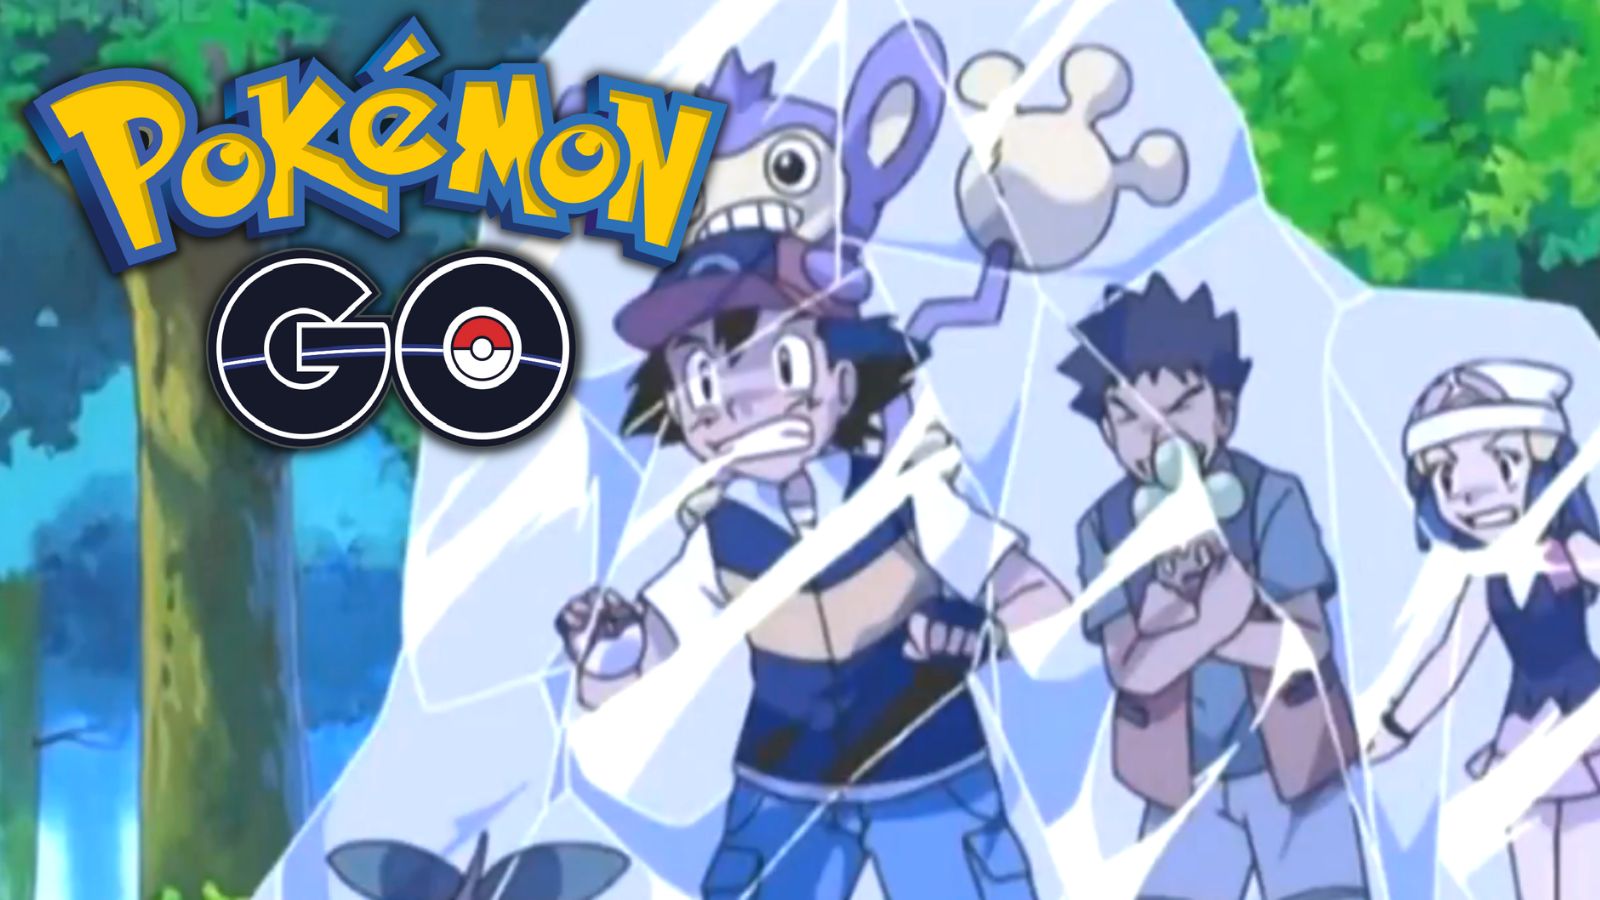 Pokémon Go Hoenn Tour Sunday. A bigger catch then yesterday! : r/pokemongo